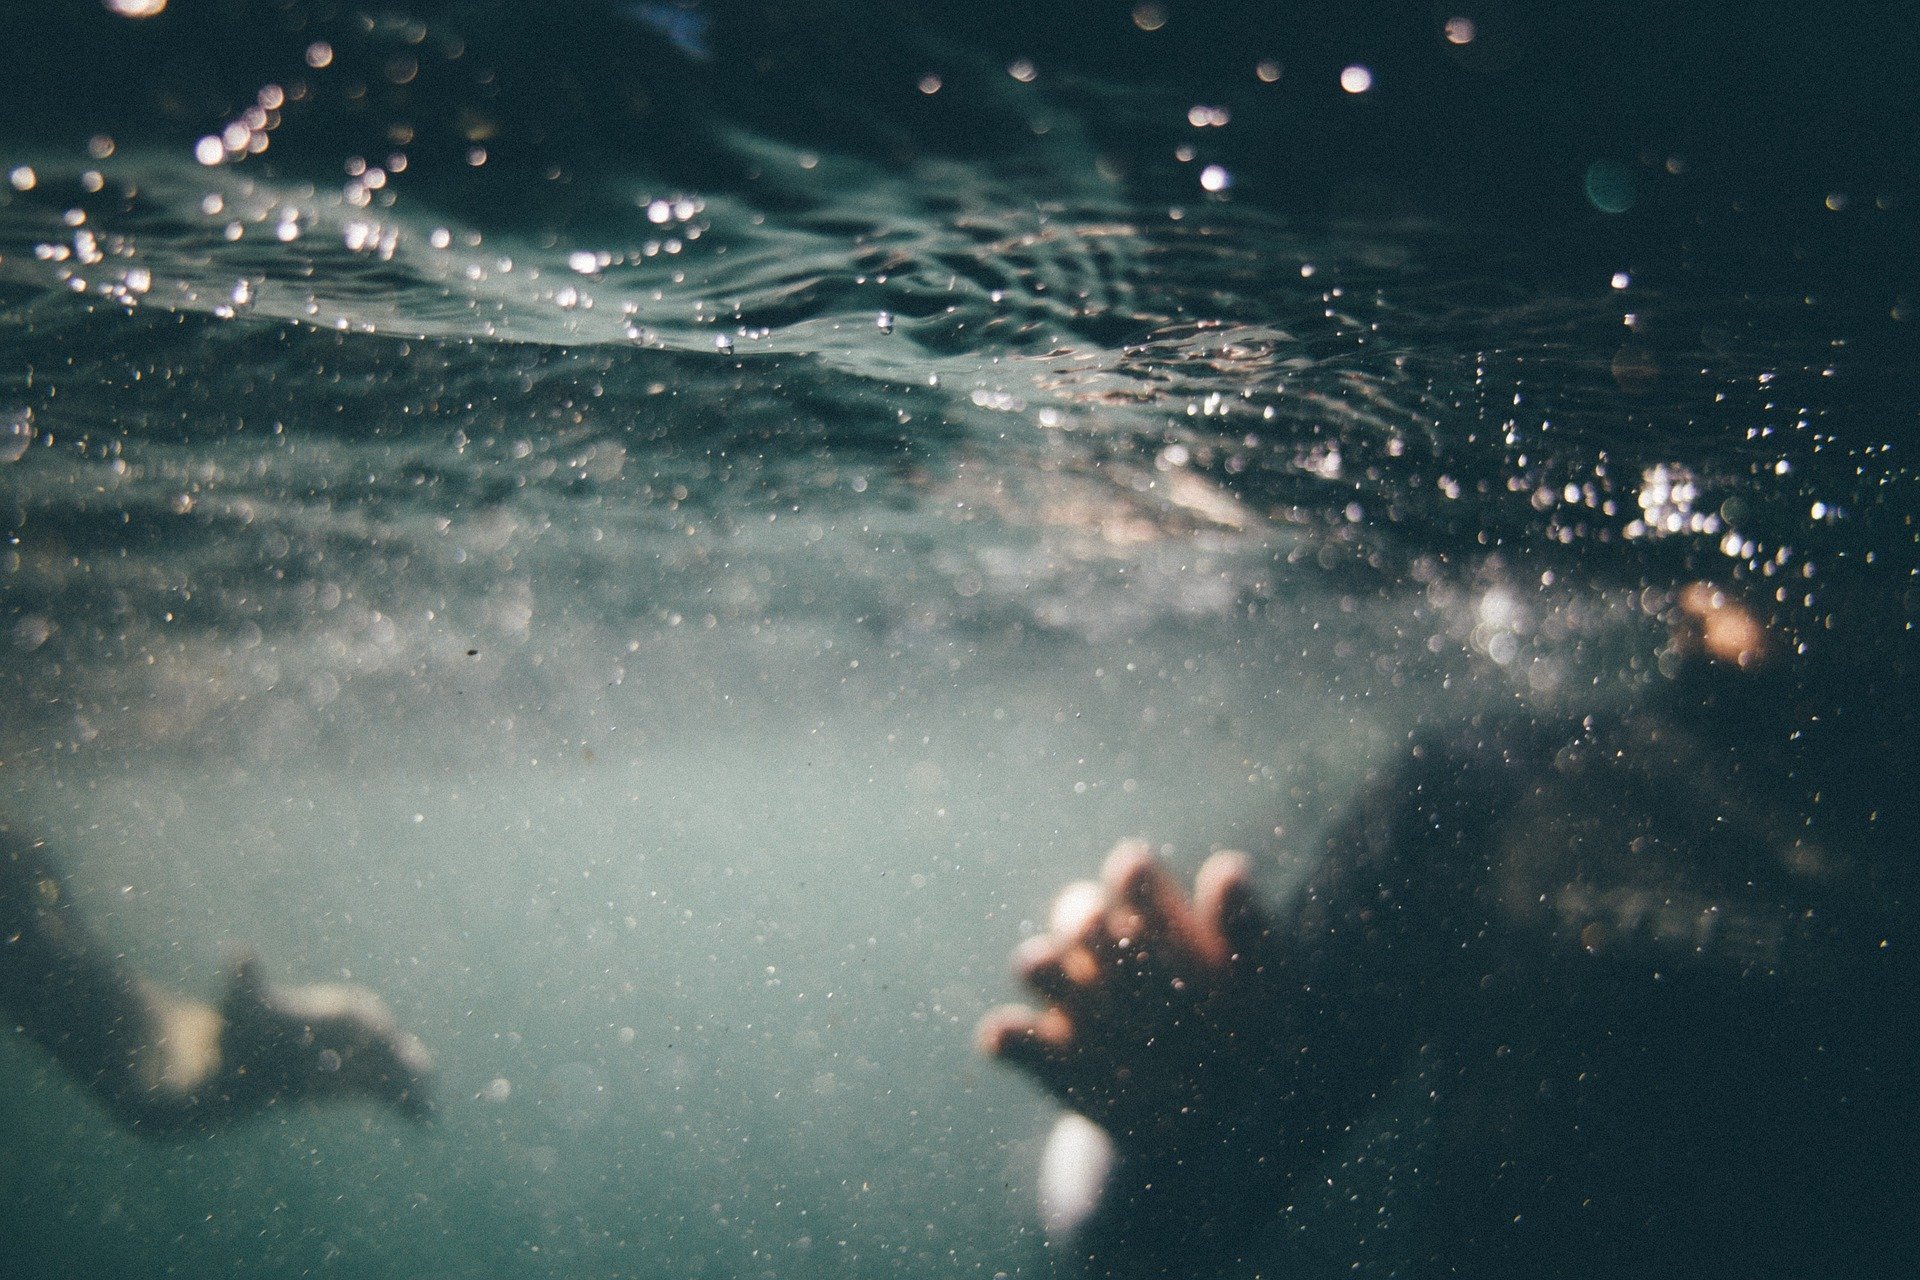 Rescate submarino en piscina. Fuente: Pixabay